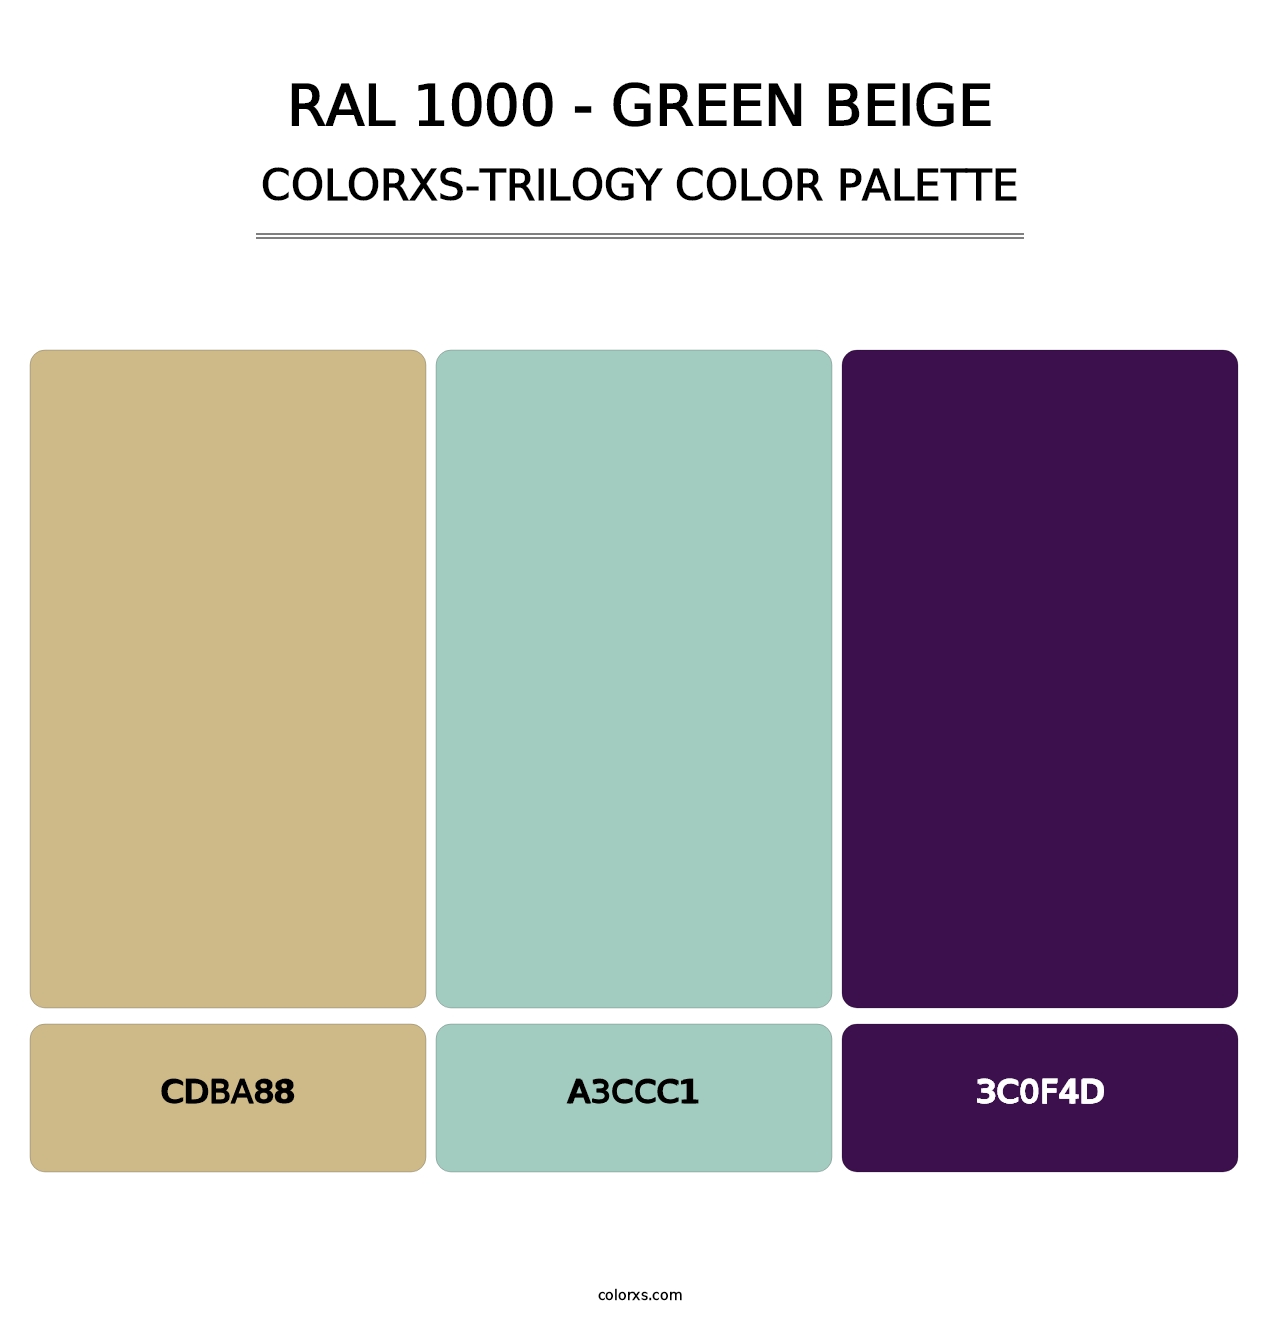 RAL 1000 - Green Beige - Colorxs Trilogy Palette